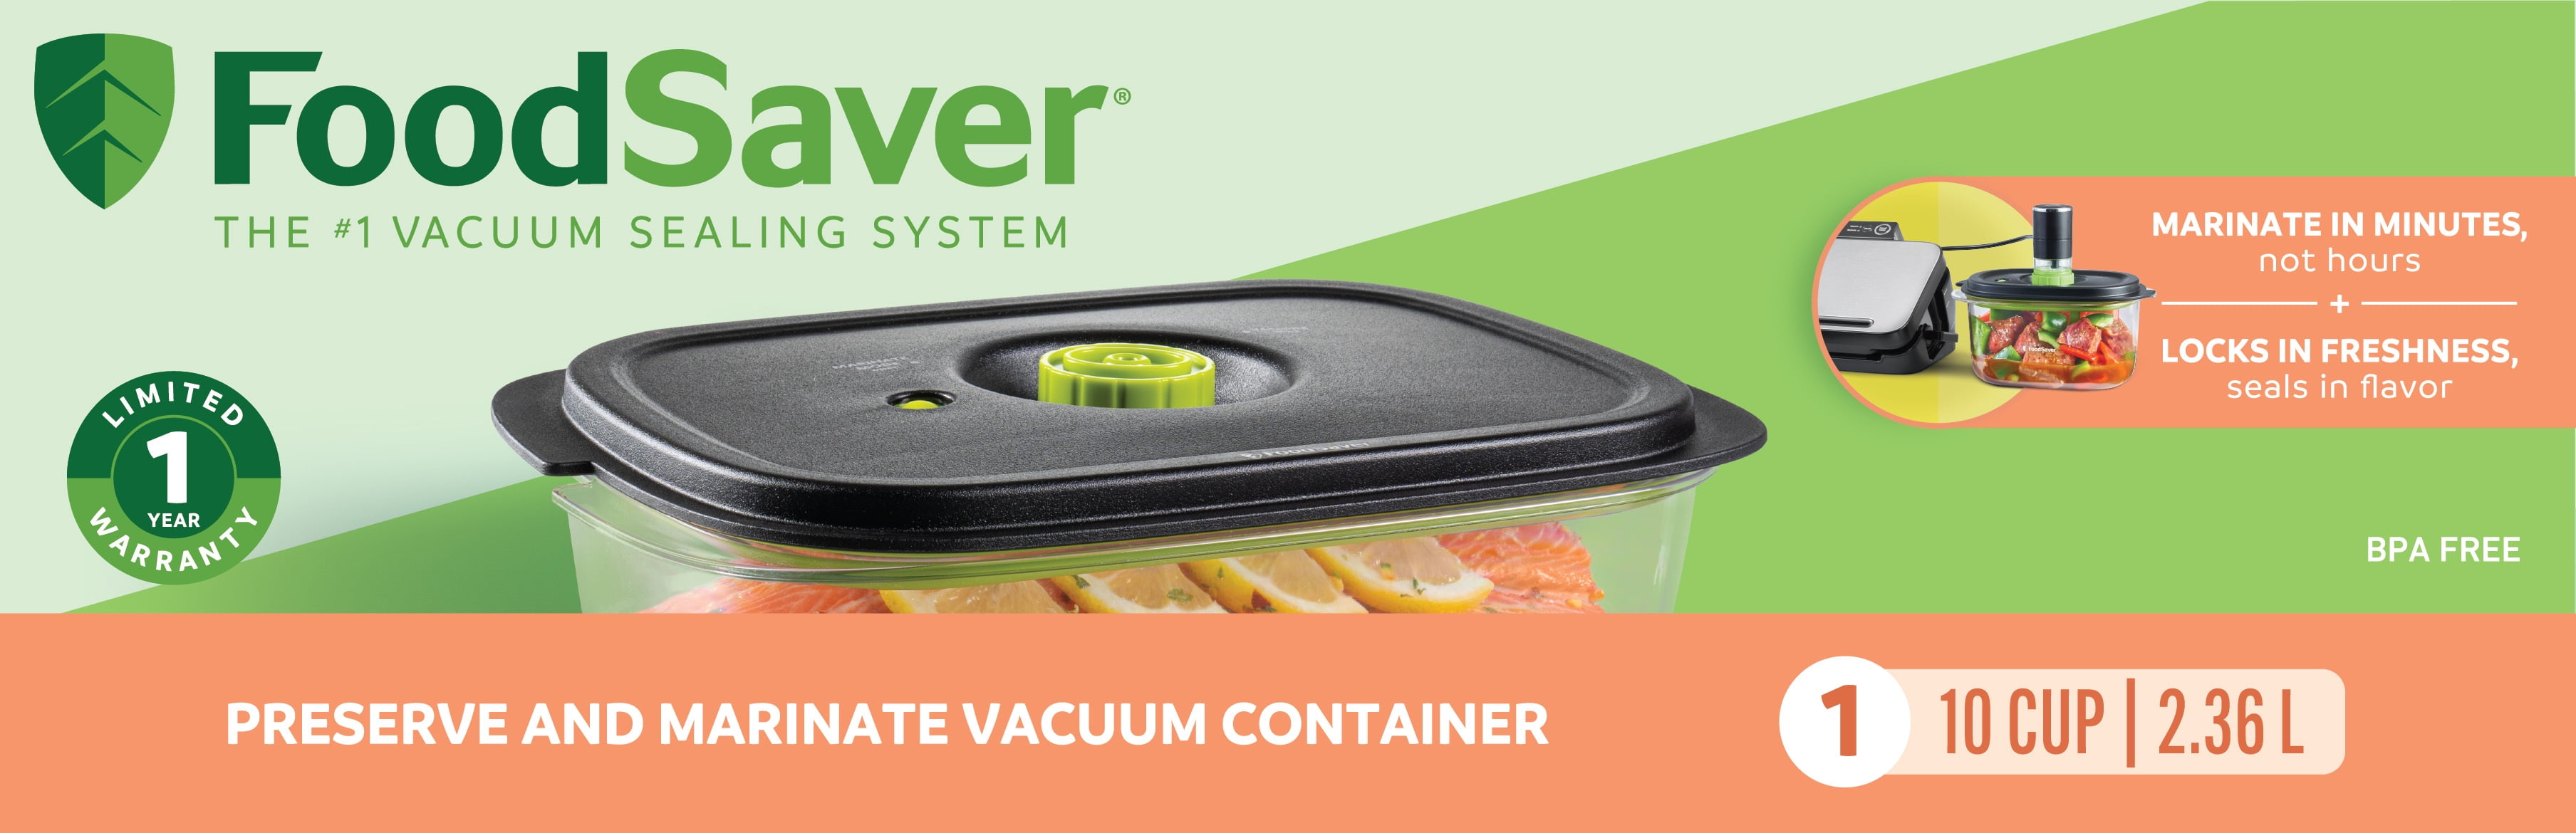 The FoodSaver® Preserve & Marinate Vacuum Seal Containers 